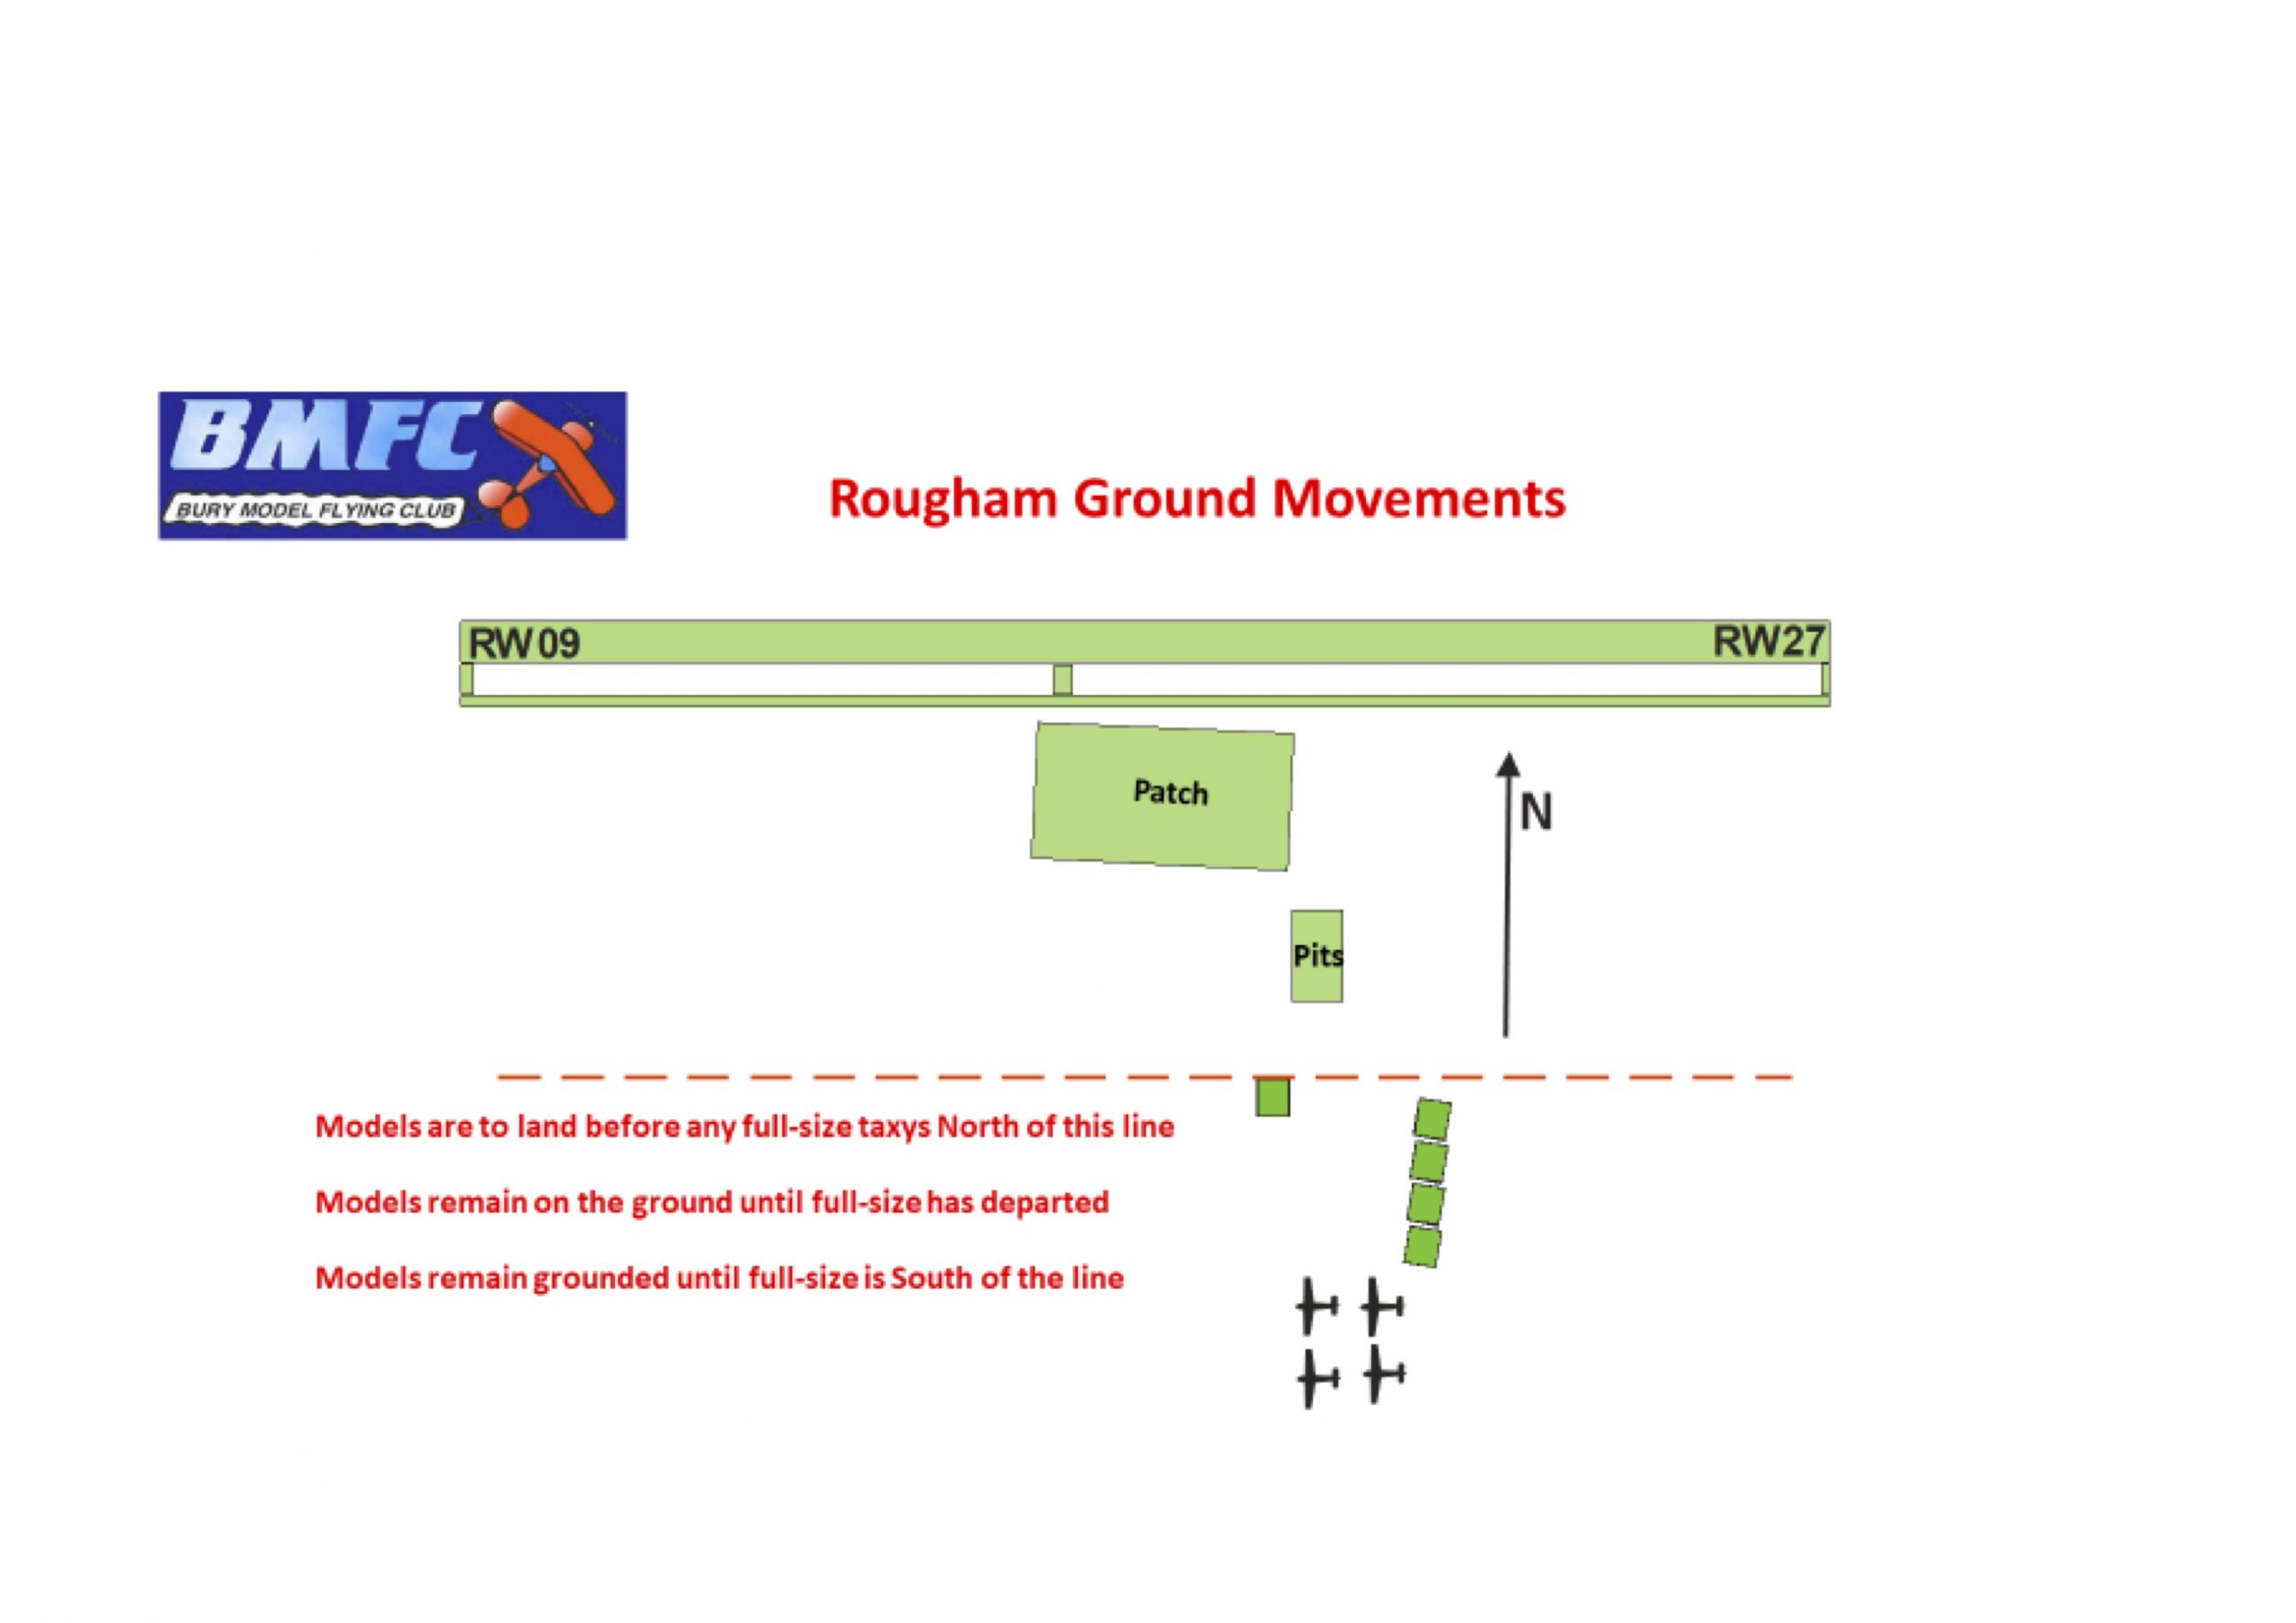 Rougham safety rule diagrams, Dec 2012